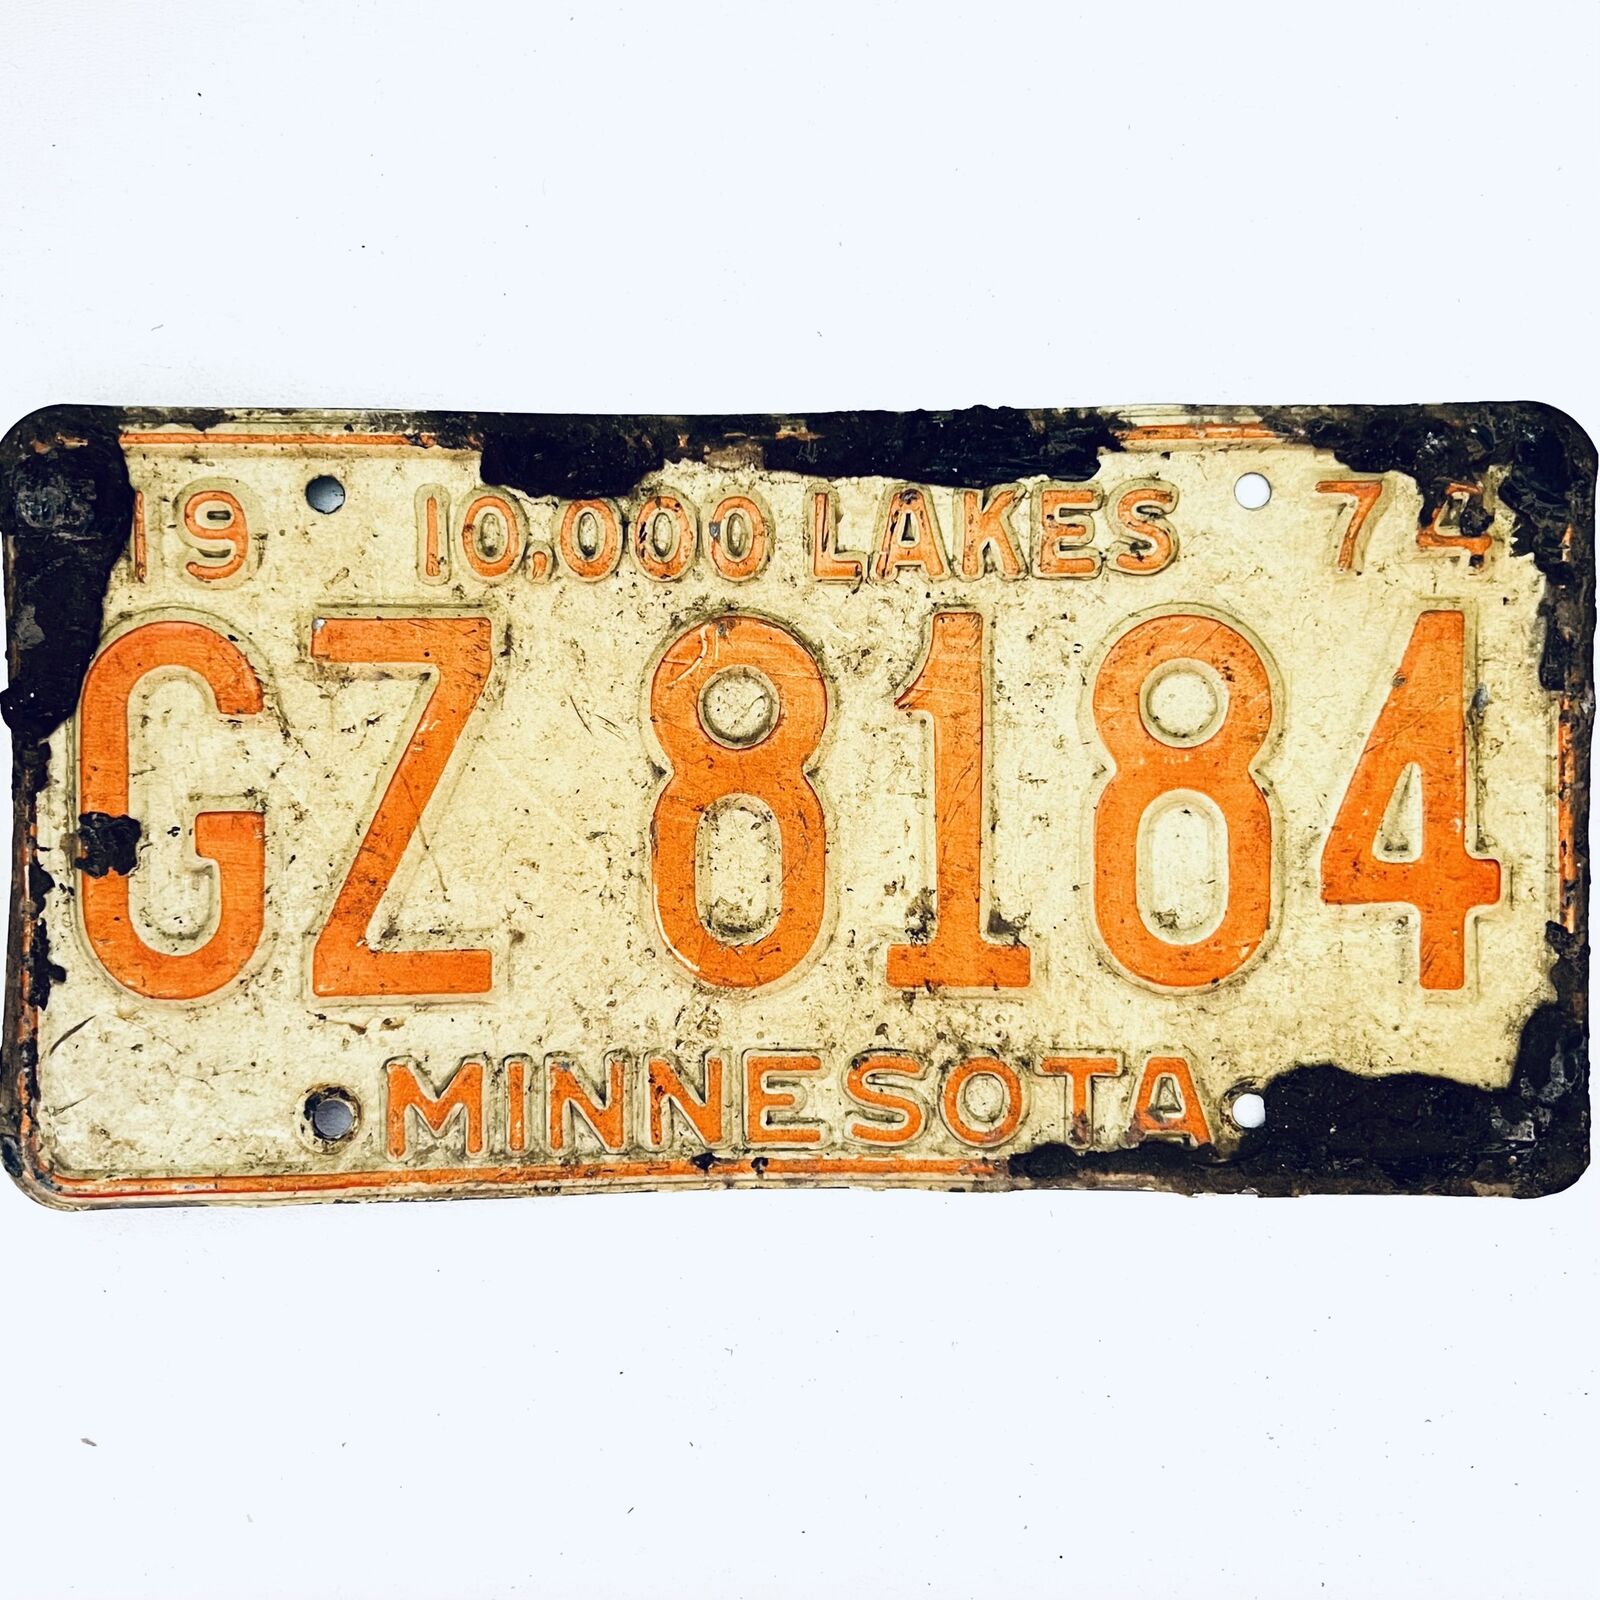 1974 United States Minnesota Lakes Passenger License Plate GZ 8184